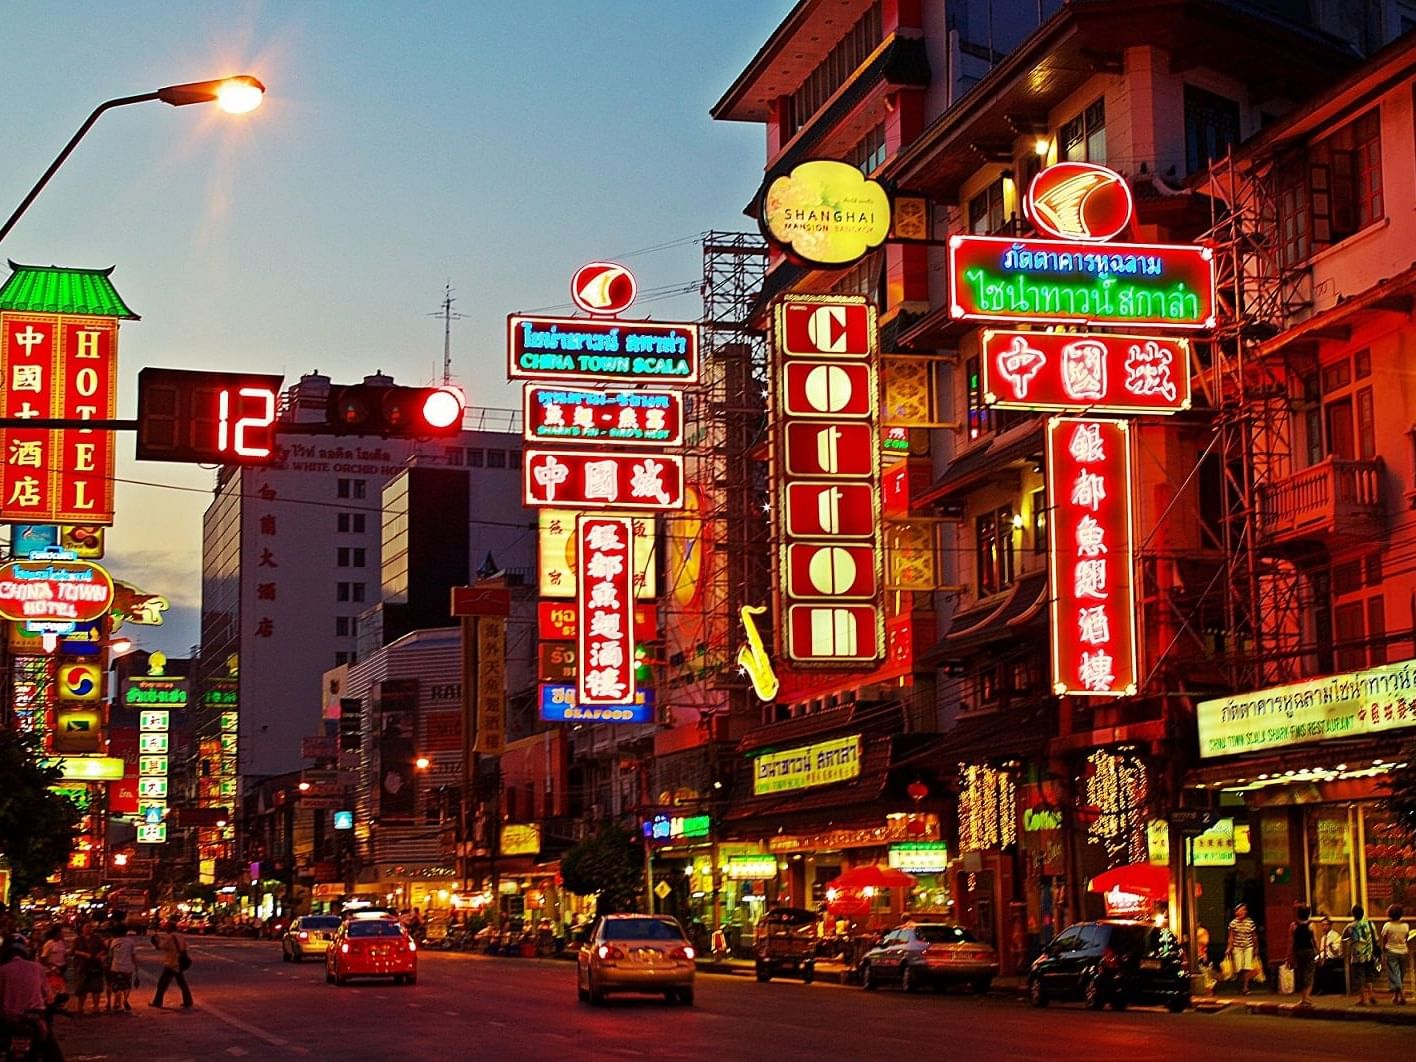 China Town street at night near Eastin Hotels